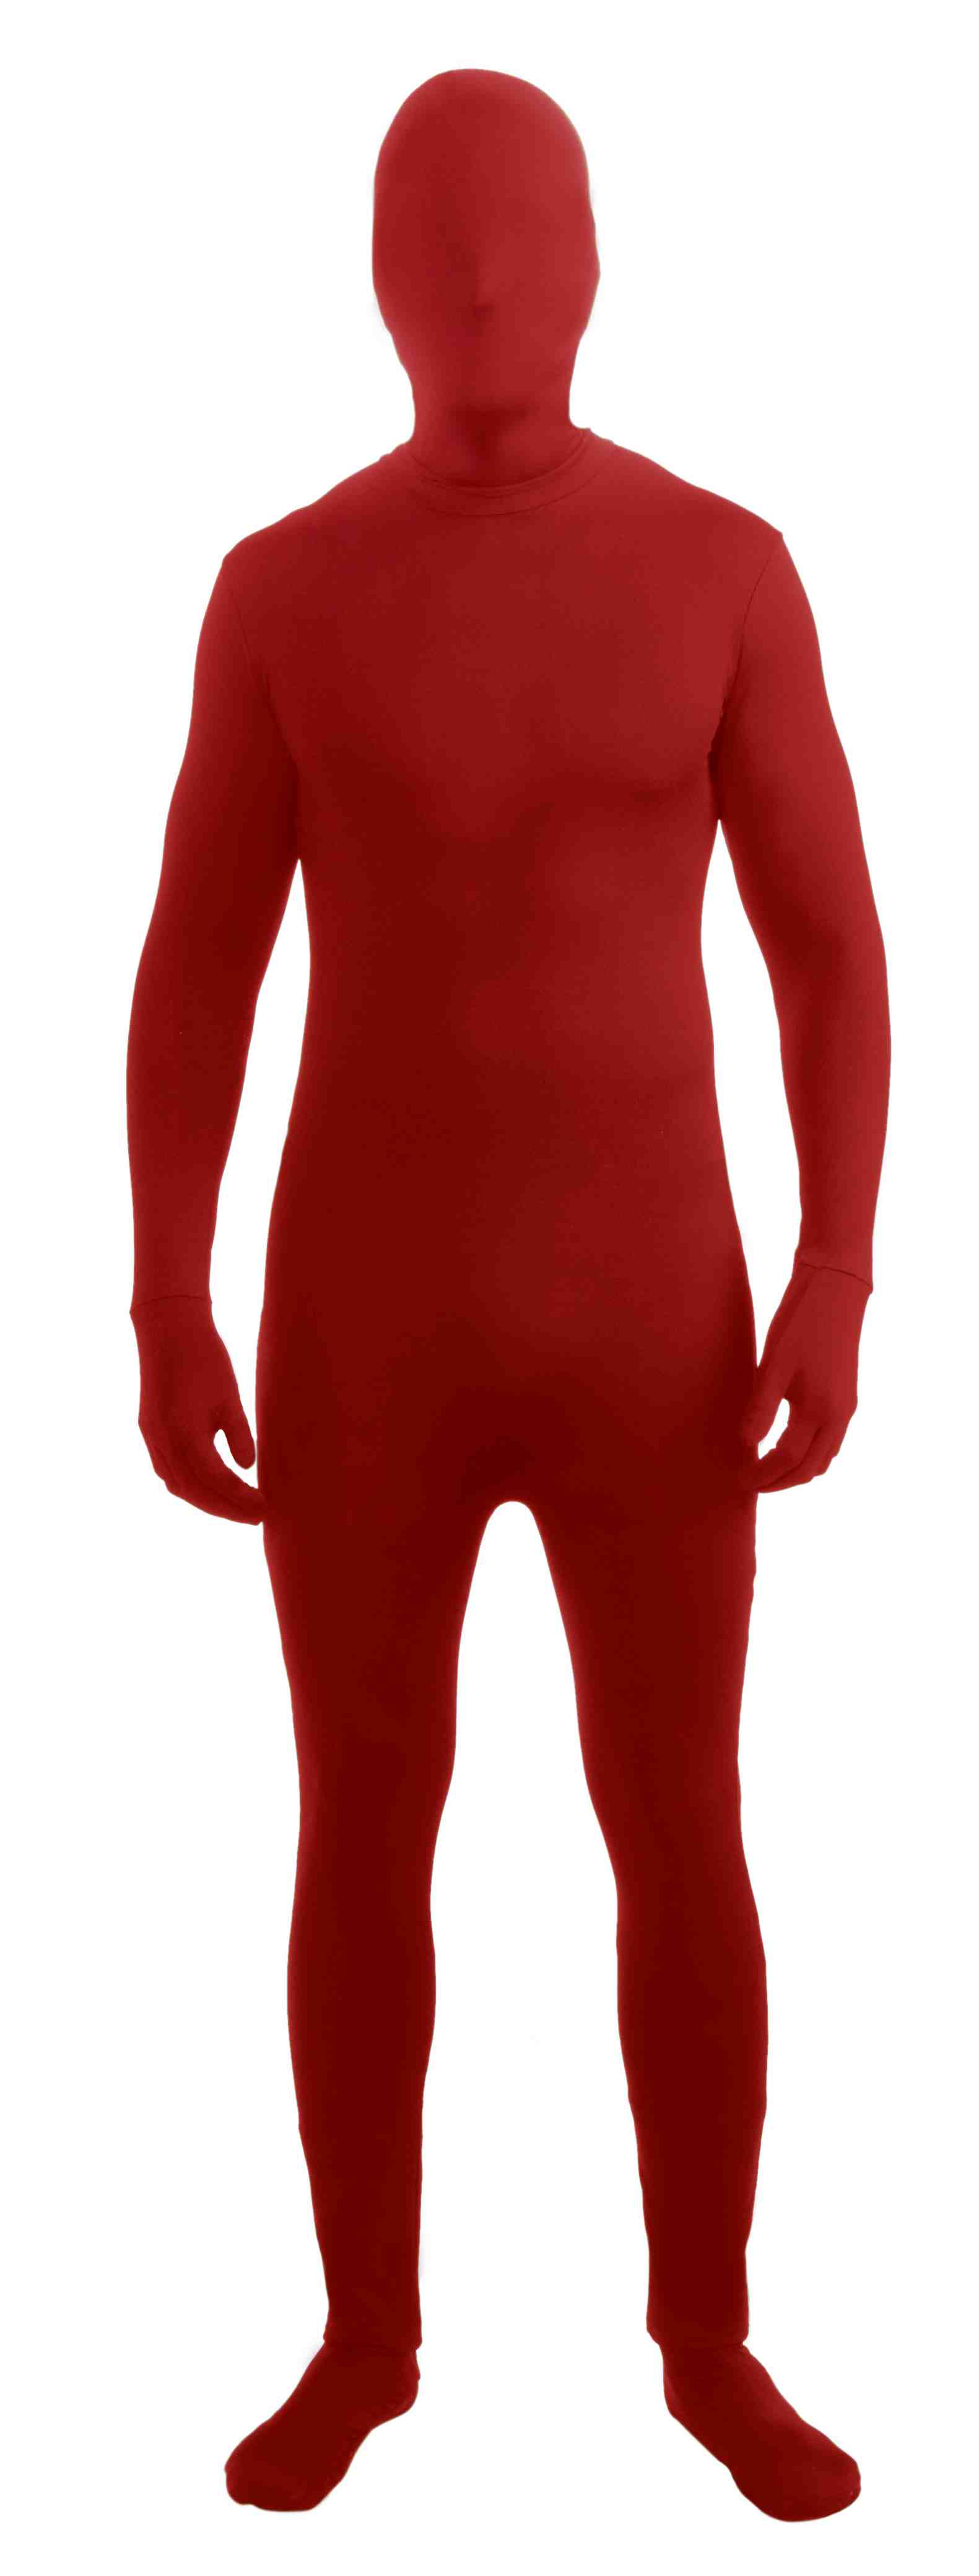 New Adult Full Body Zentai Suit Costume For Halloween Men Second